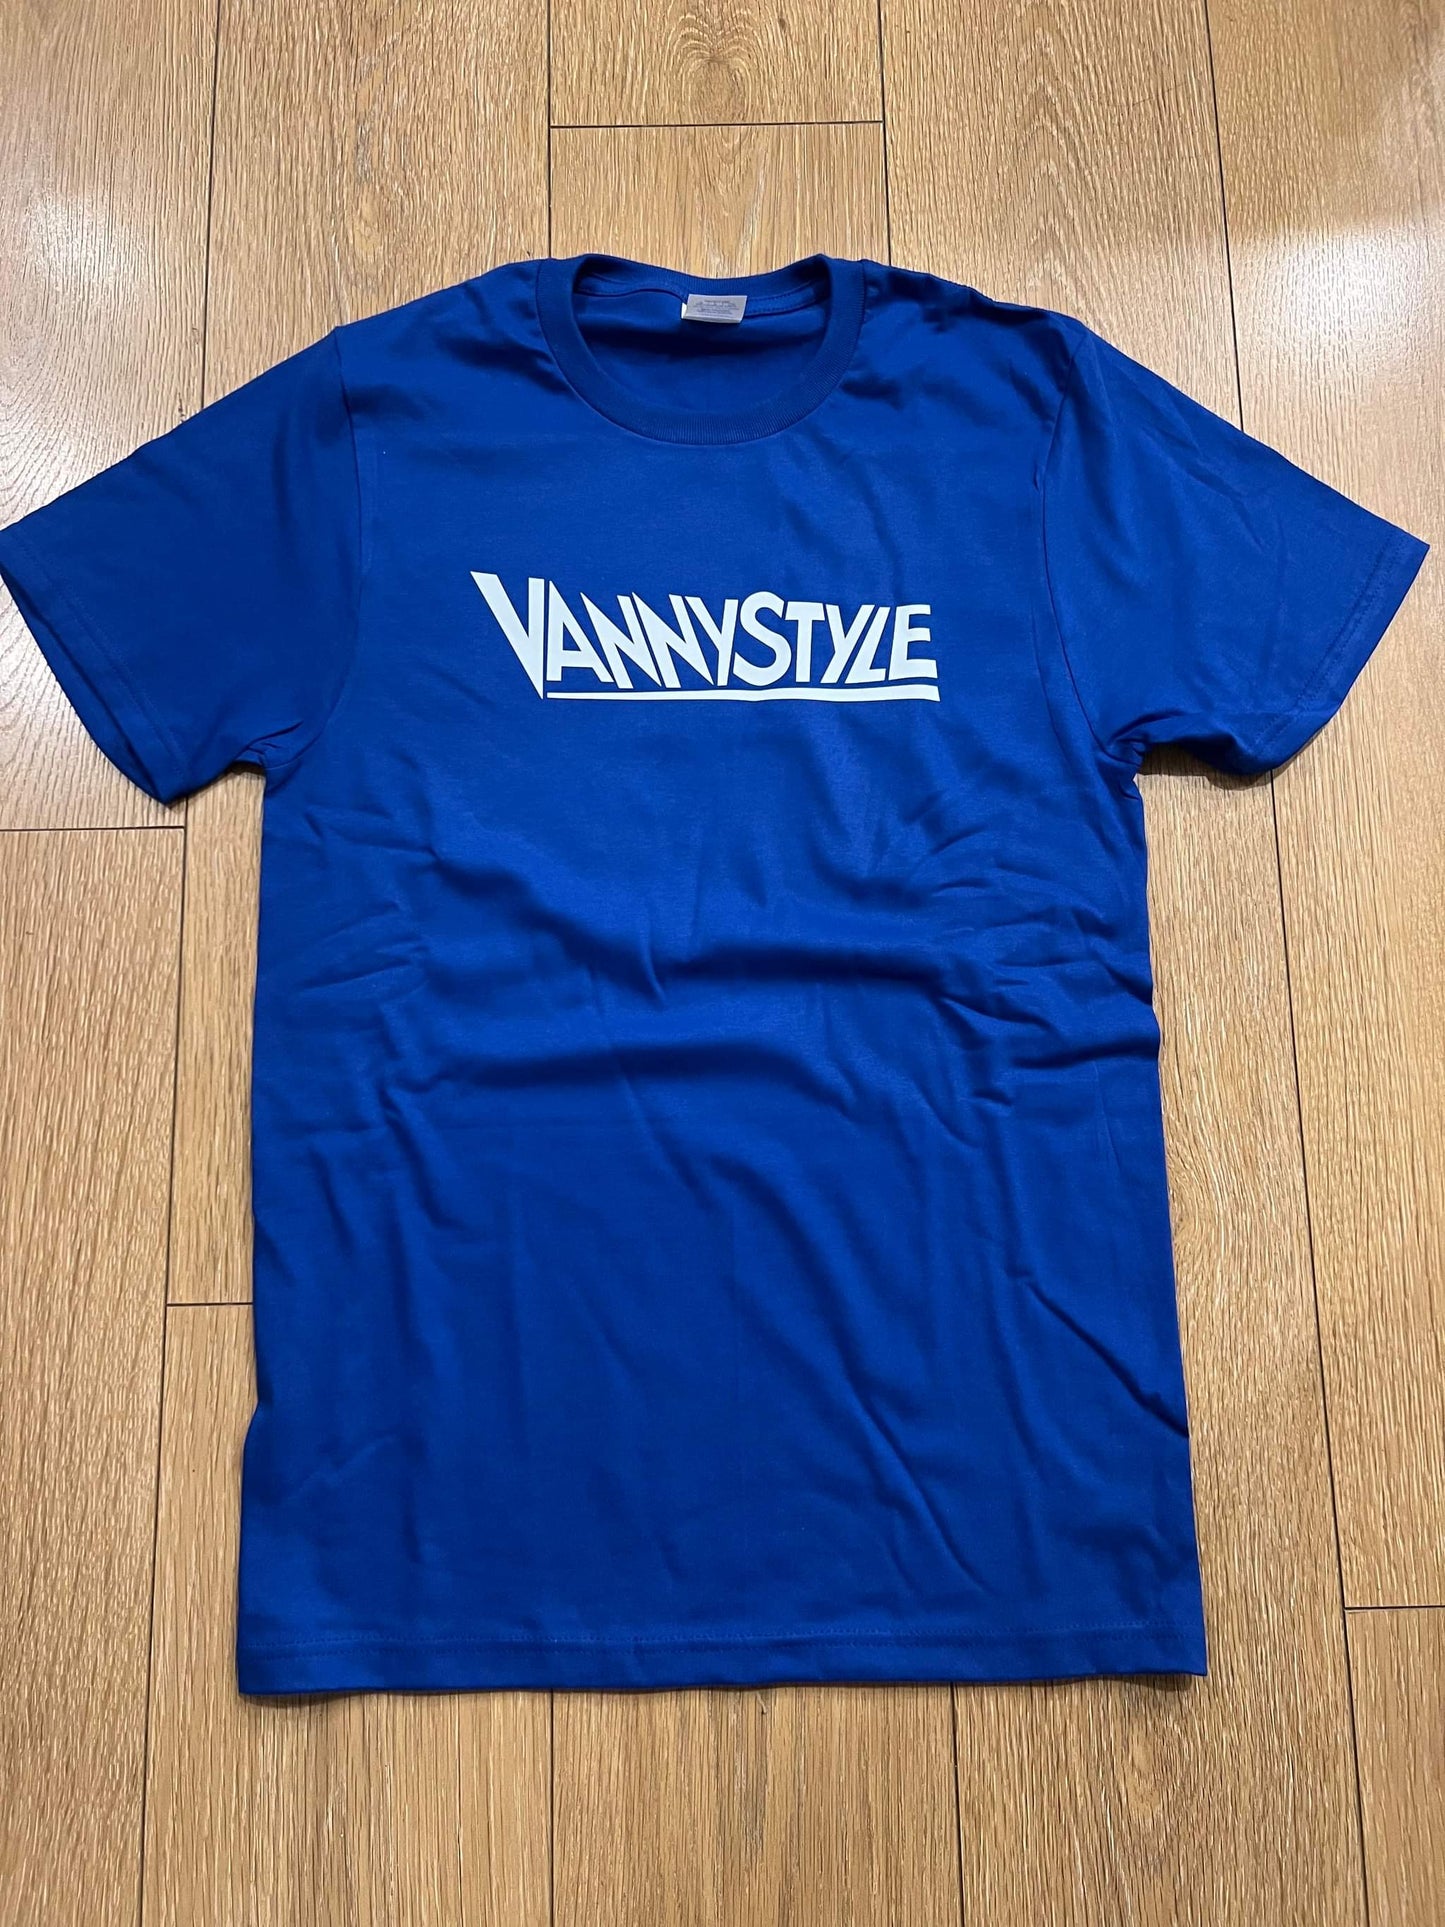 Vannystyle T-Shirt